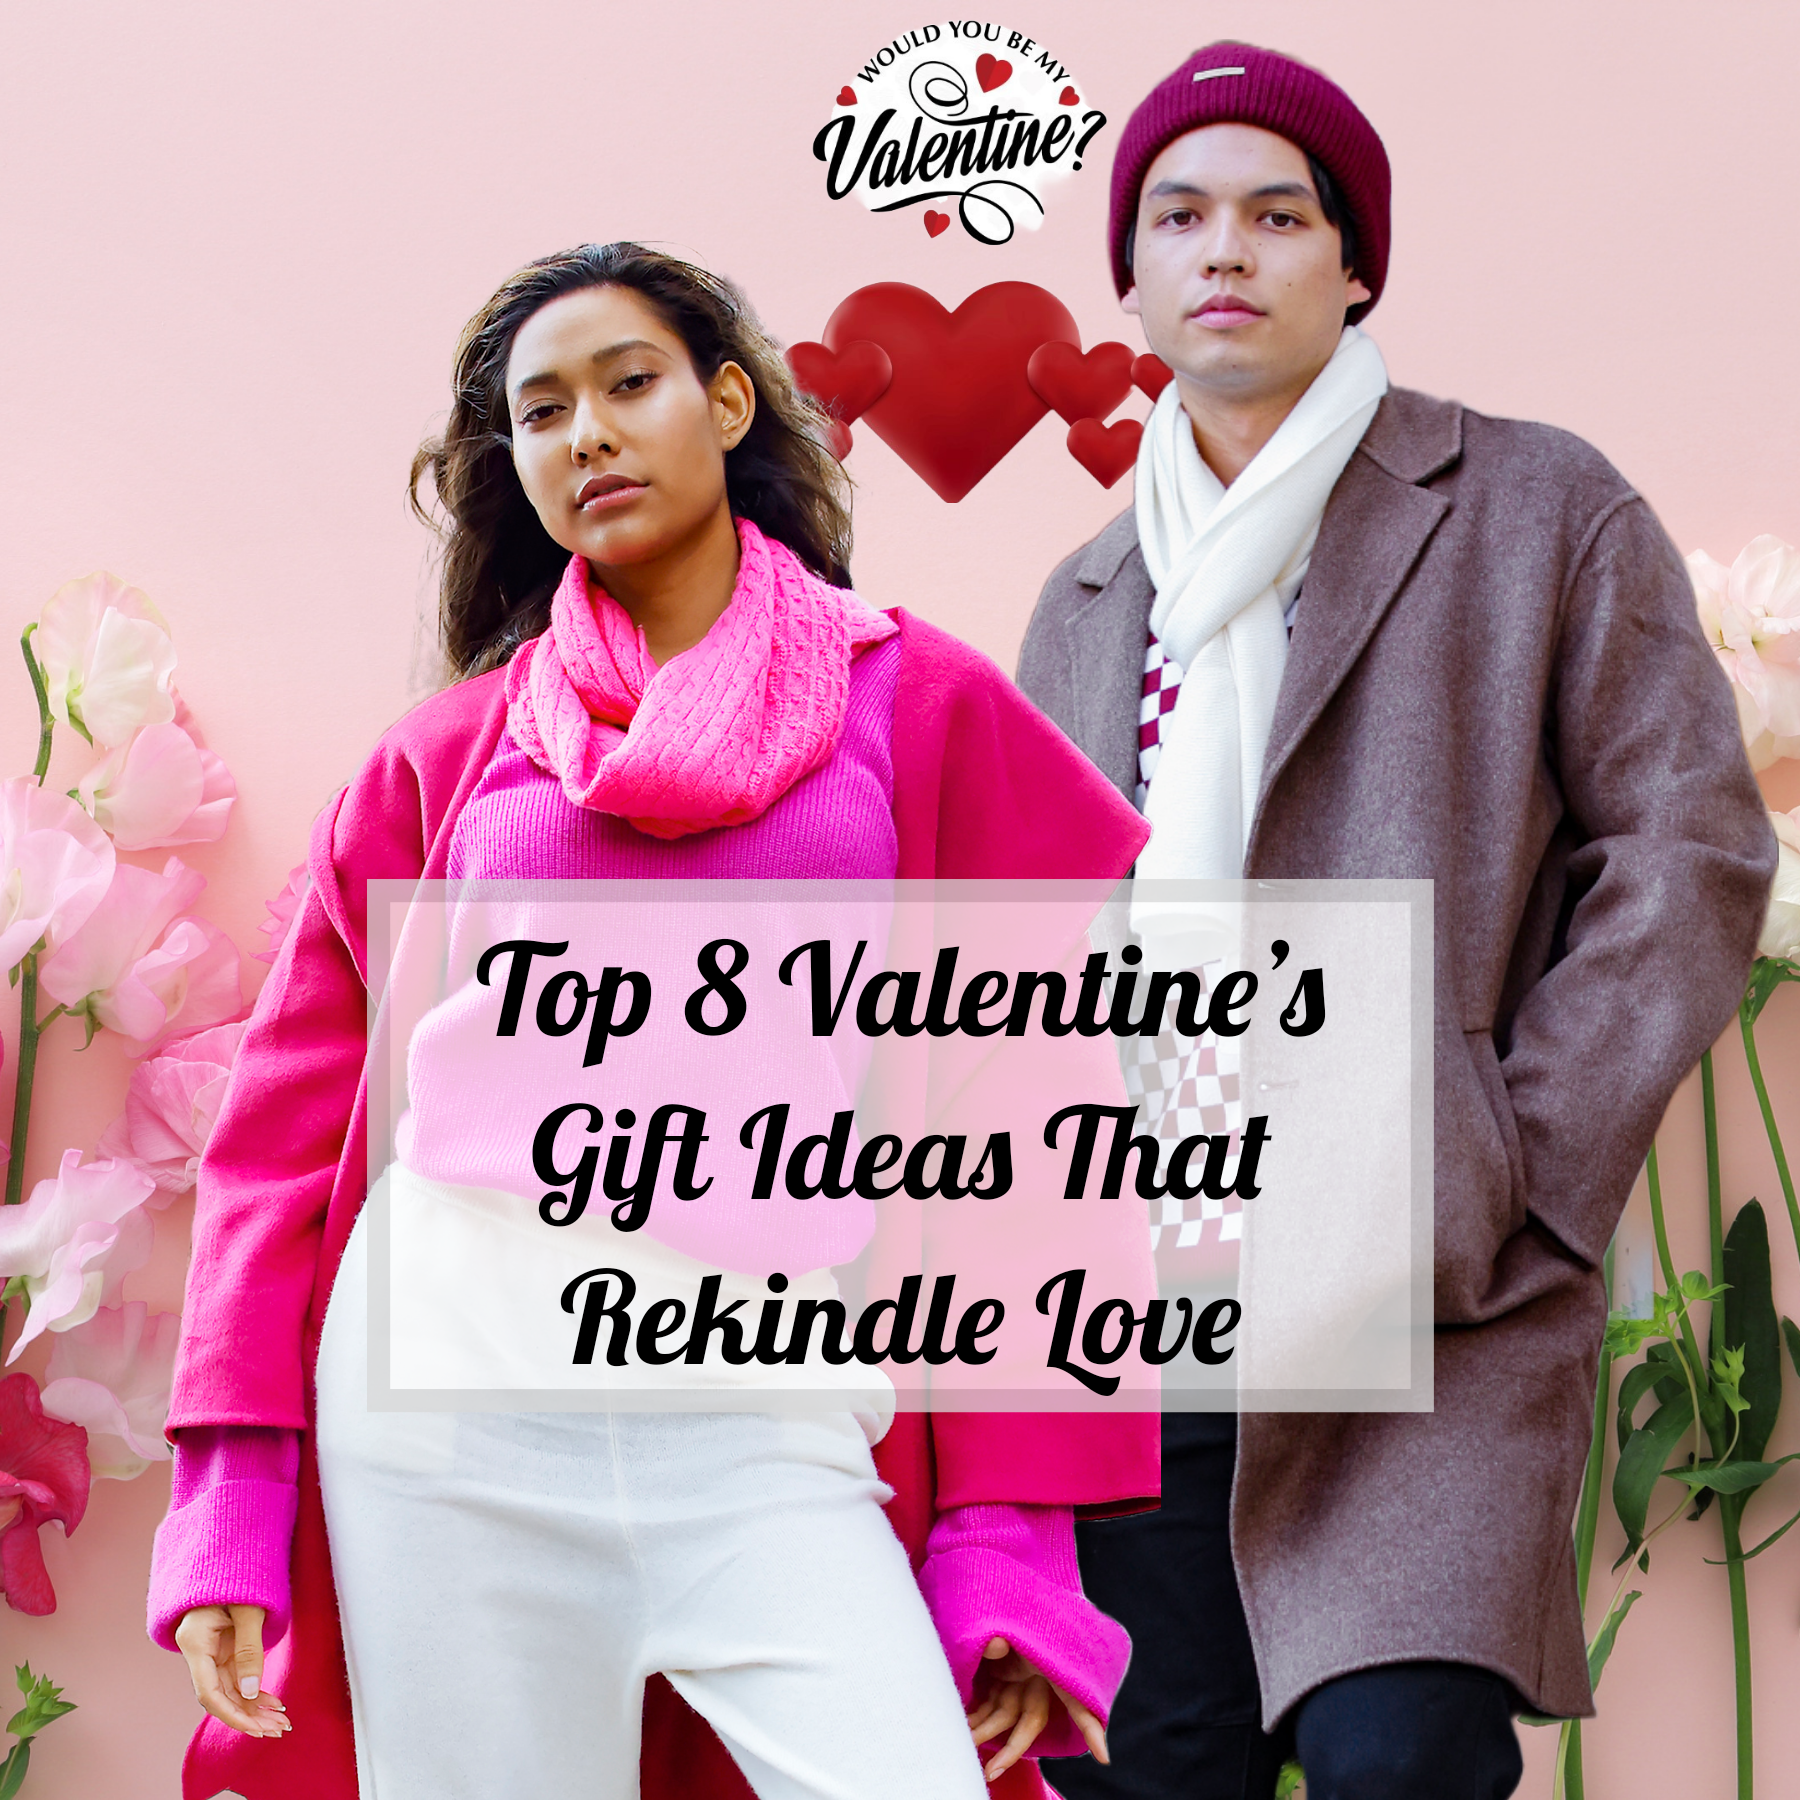 Top 8 Valentine's Gift Ideas That Rekindle Love